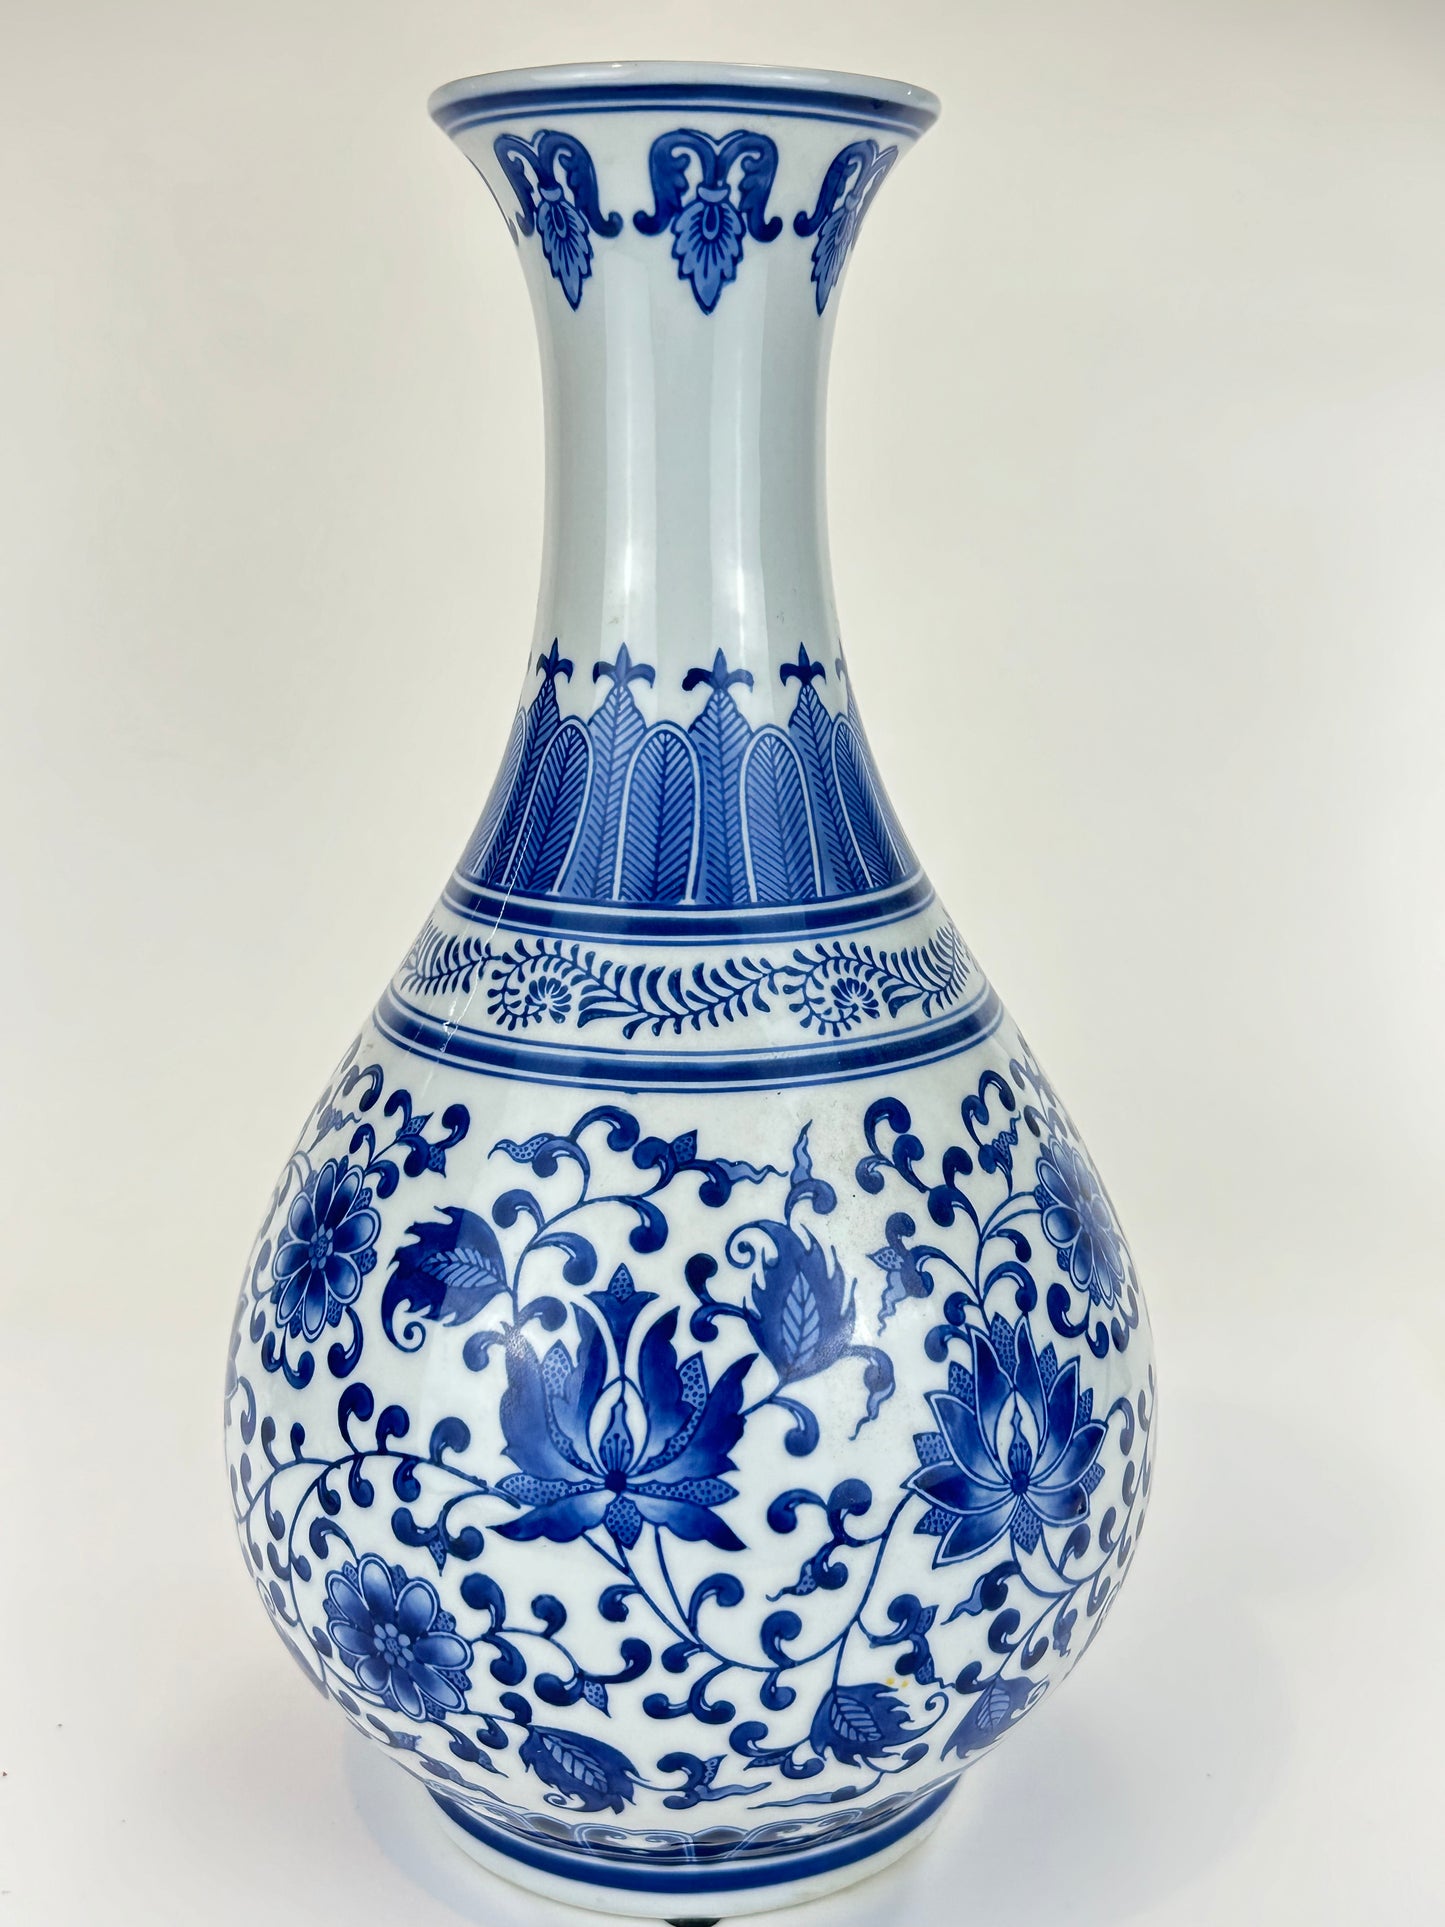 Vintage Chinese Large Vase Blue & White Floral & Arabesque 17”H